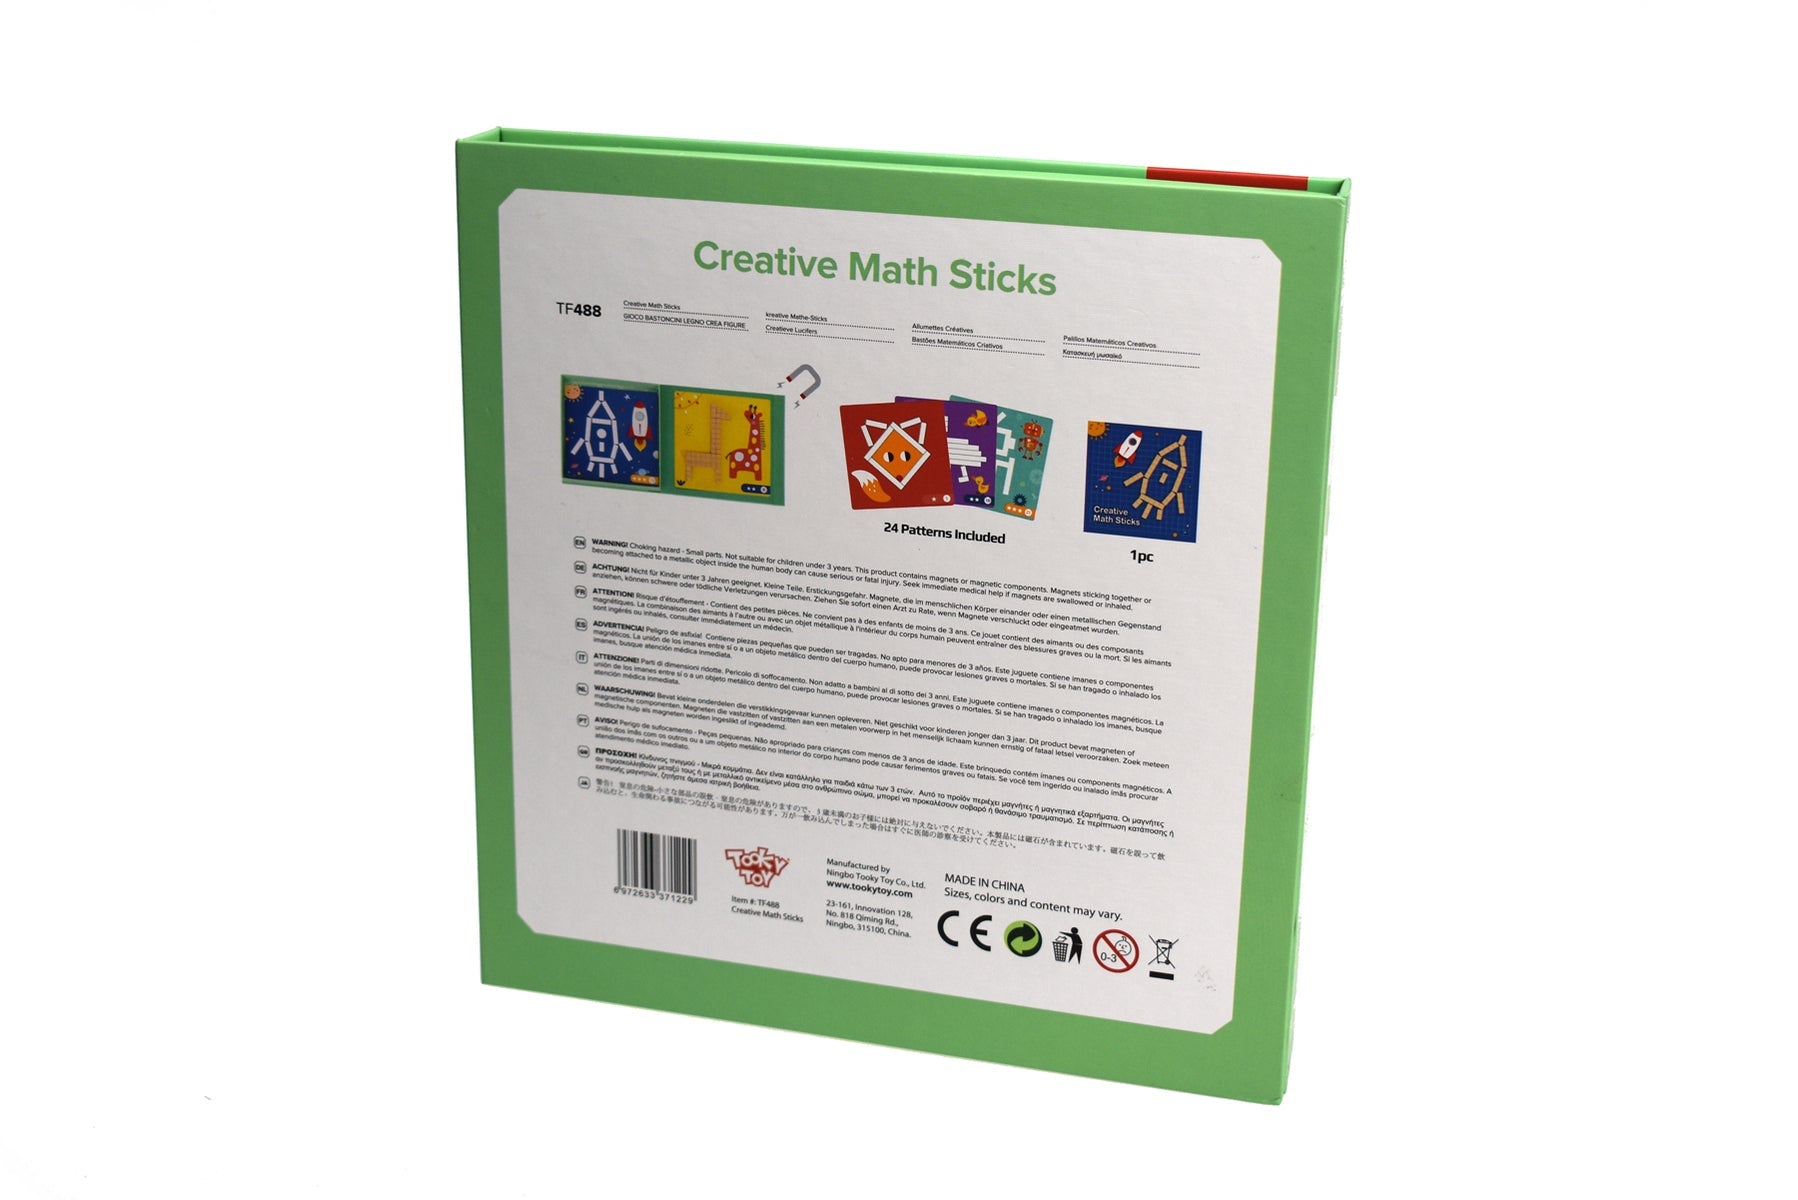 Creative Math Sticks Puzzle Game